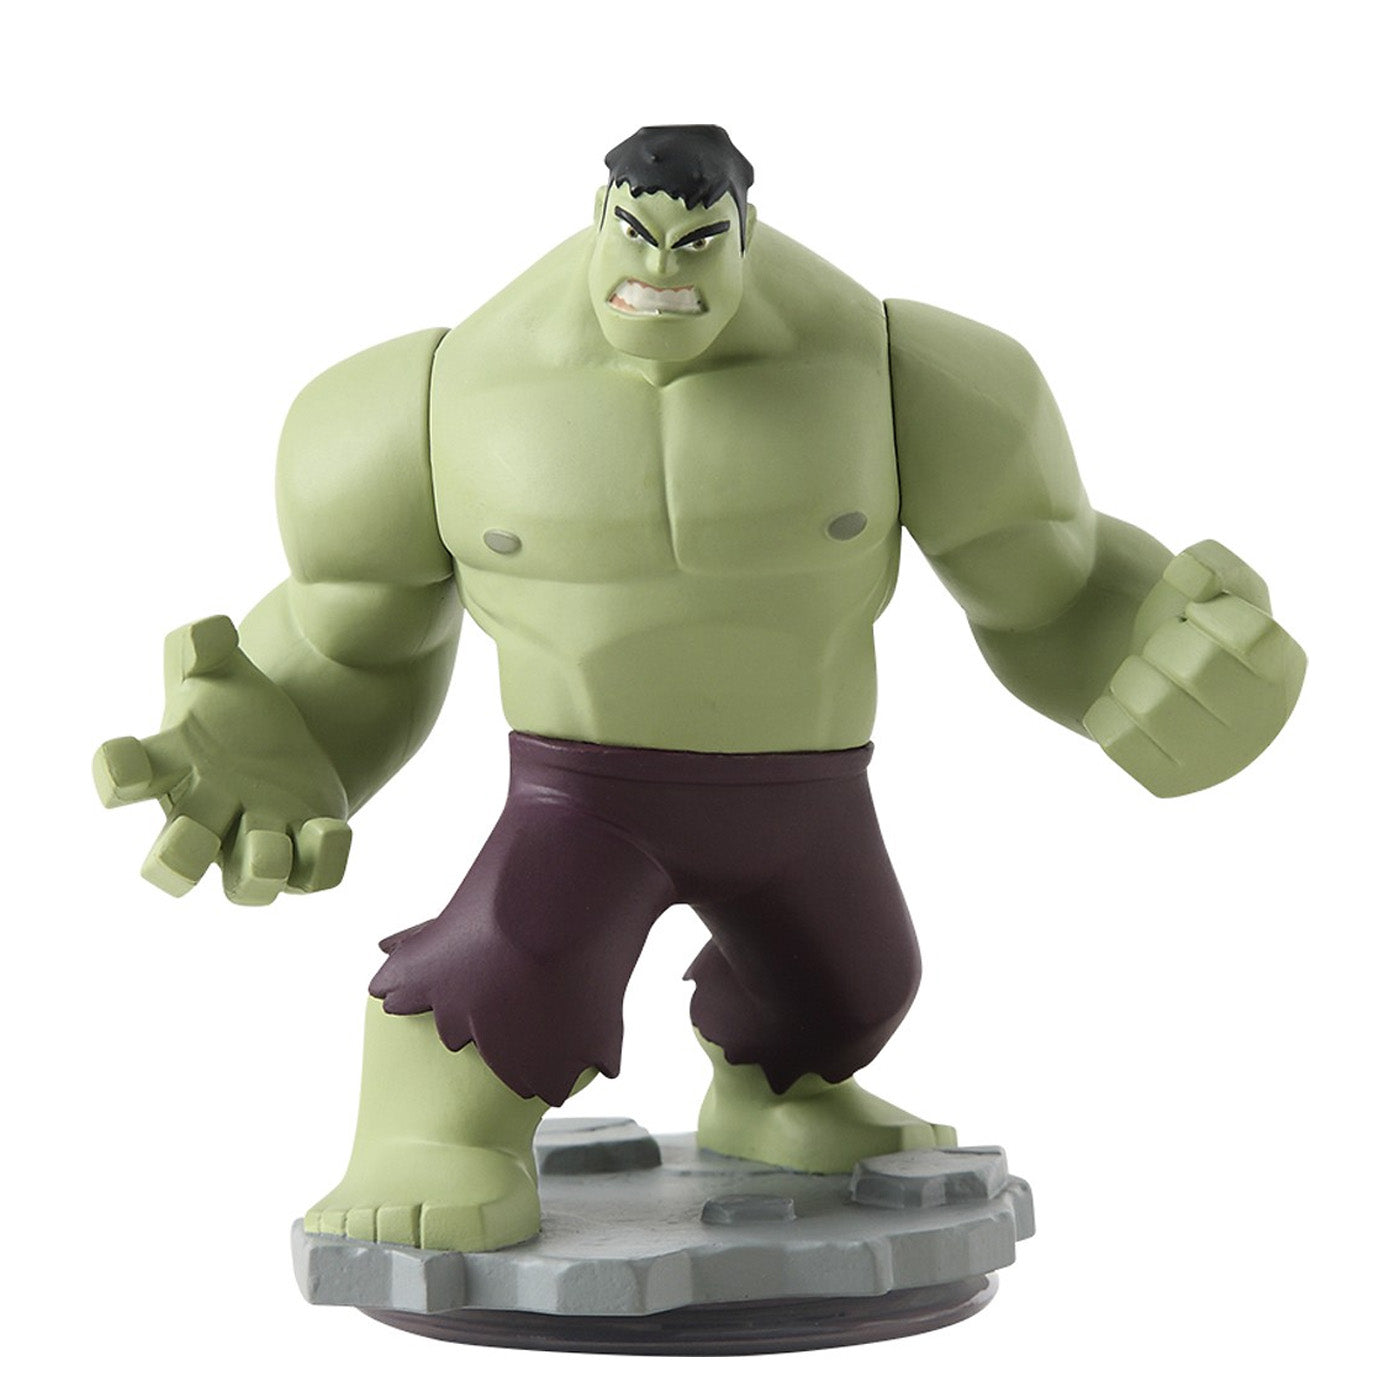 Disney Infinity 2.0 Character: Hulk